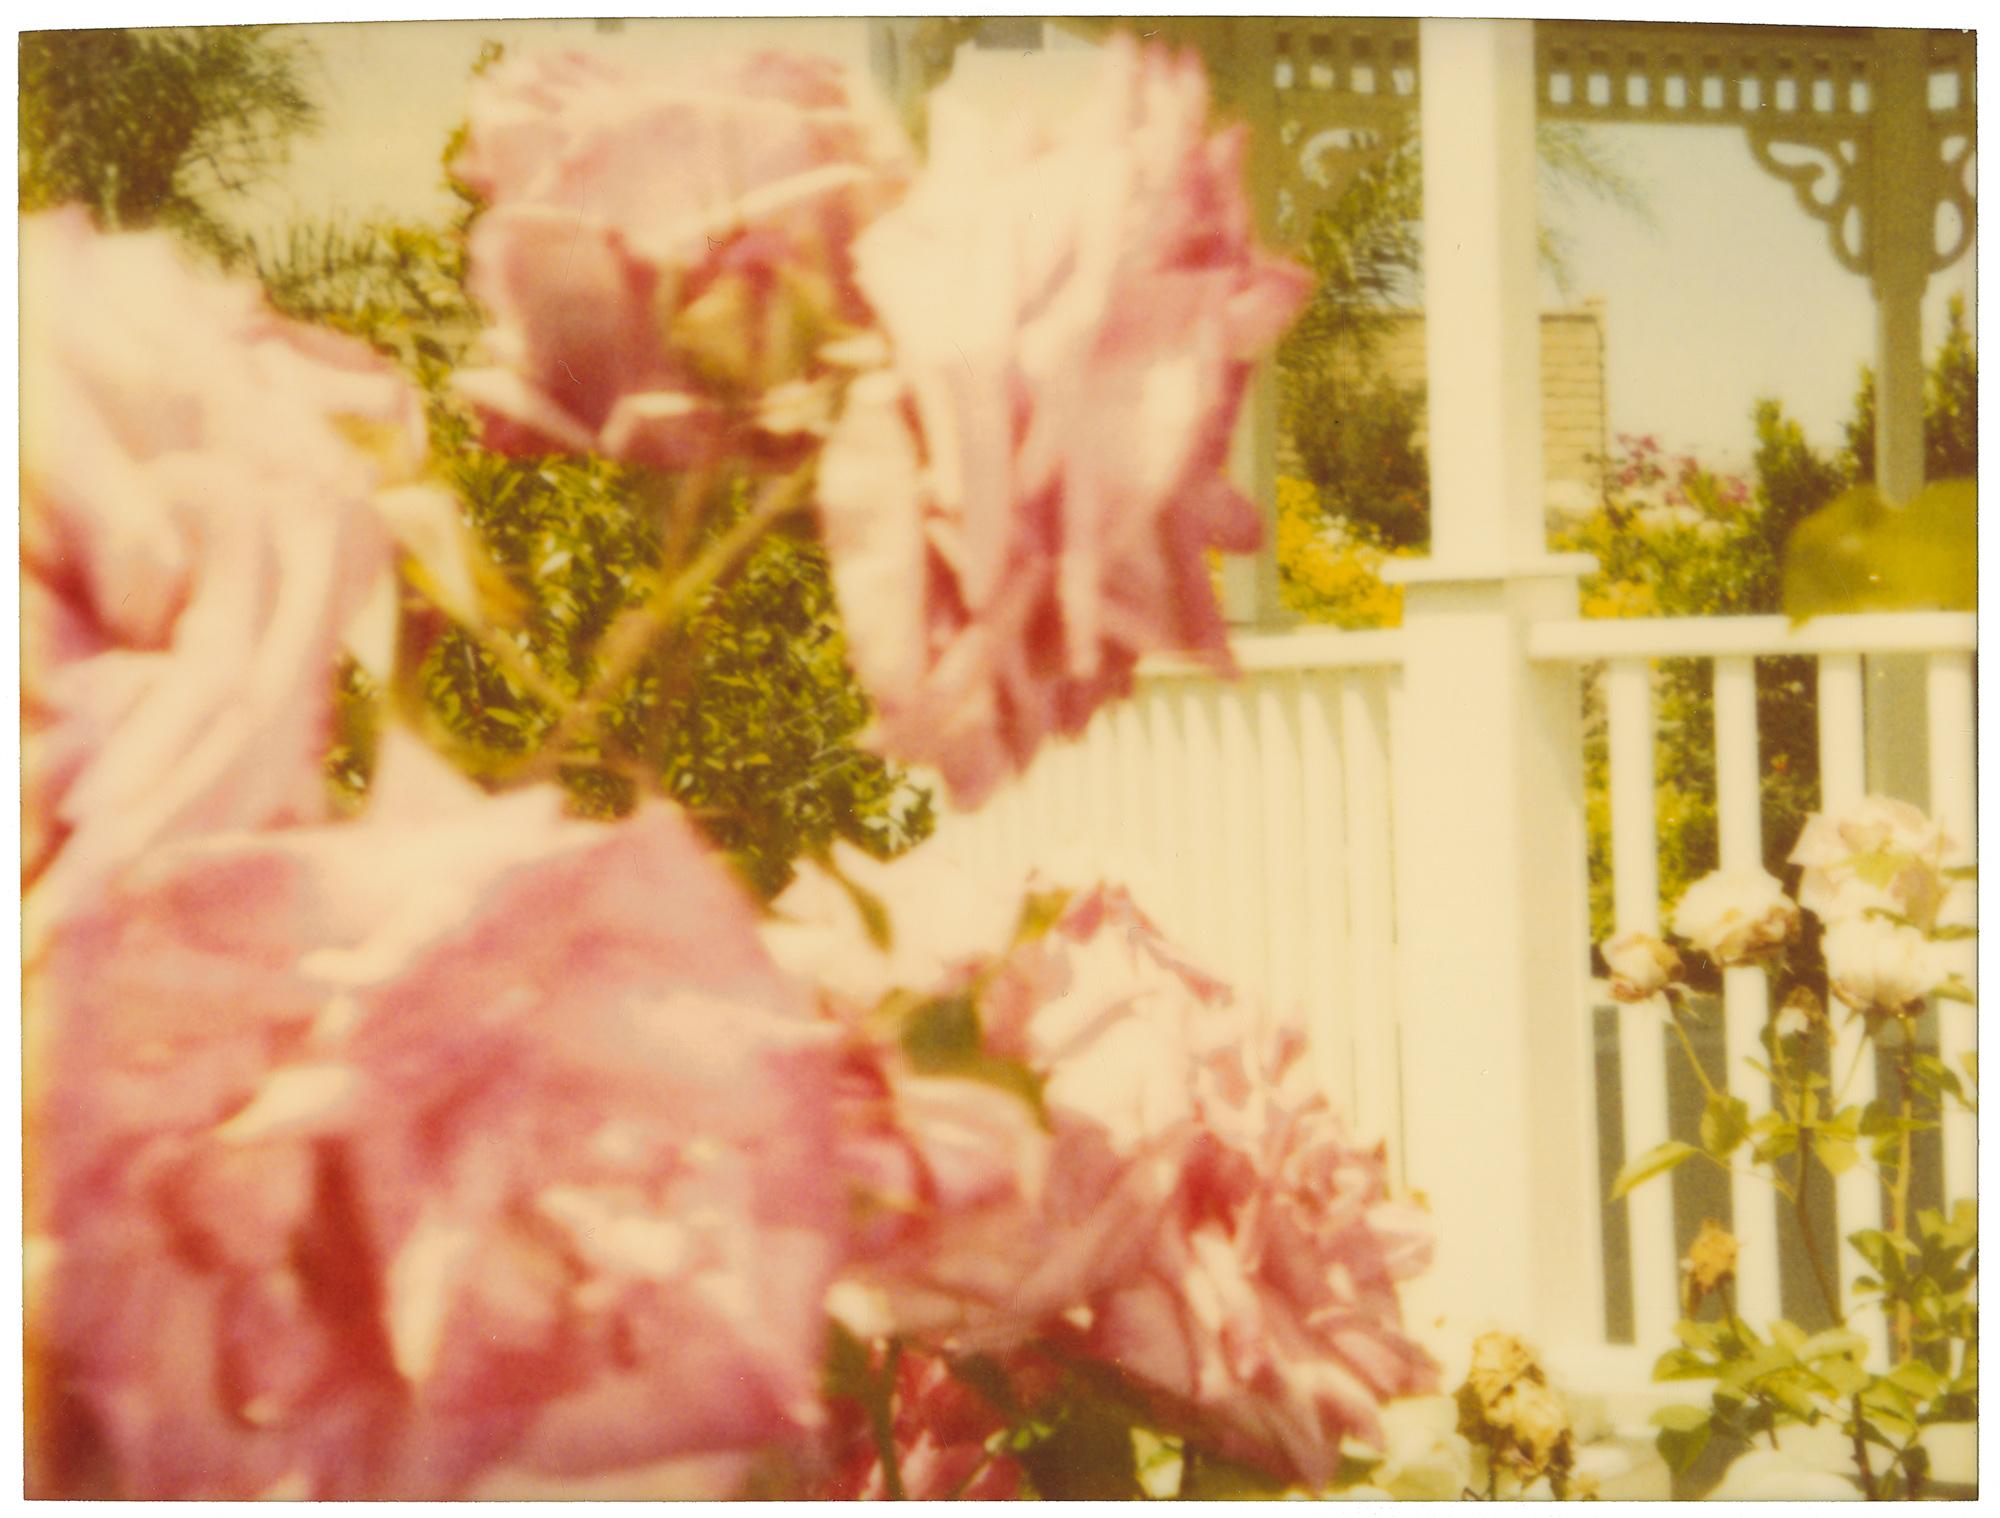 Rosegarden #01 (Suburbia), diptych - 21st Century, Contemporary, Color, Polaroid - Beige Landscape Photograph by Stefanie Schneider